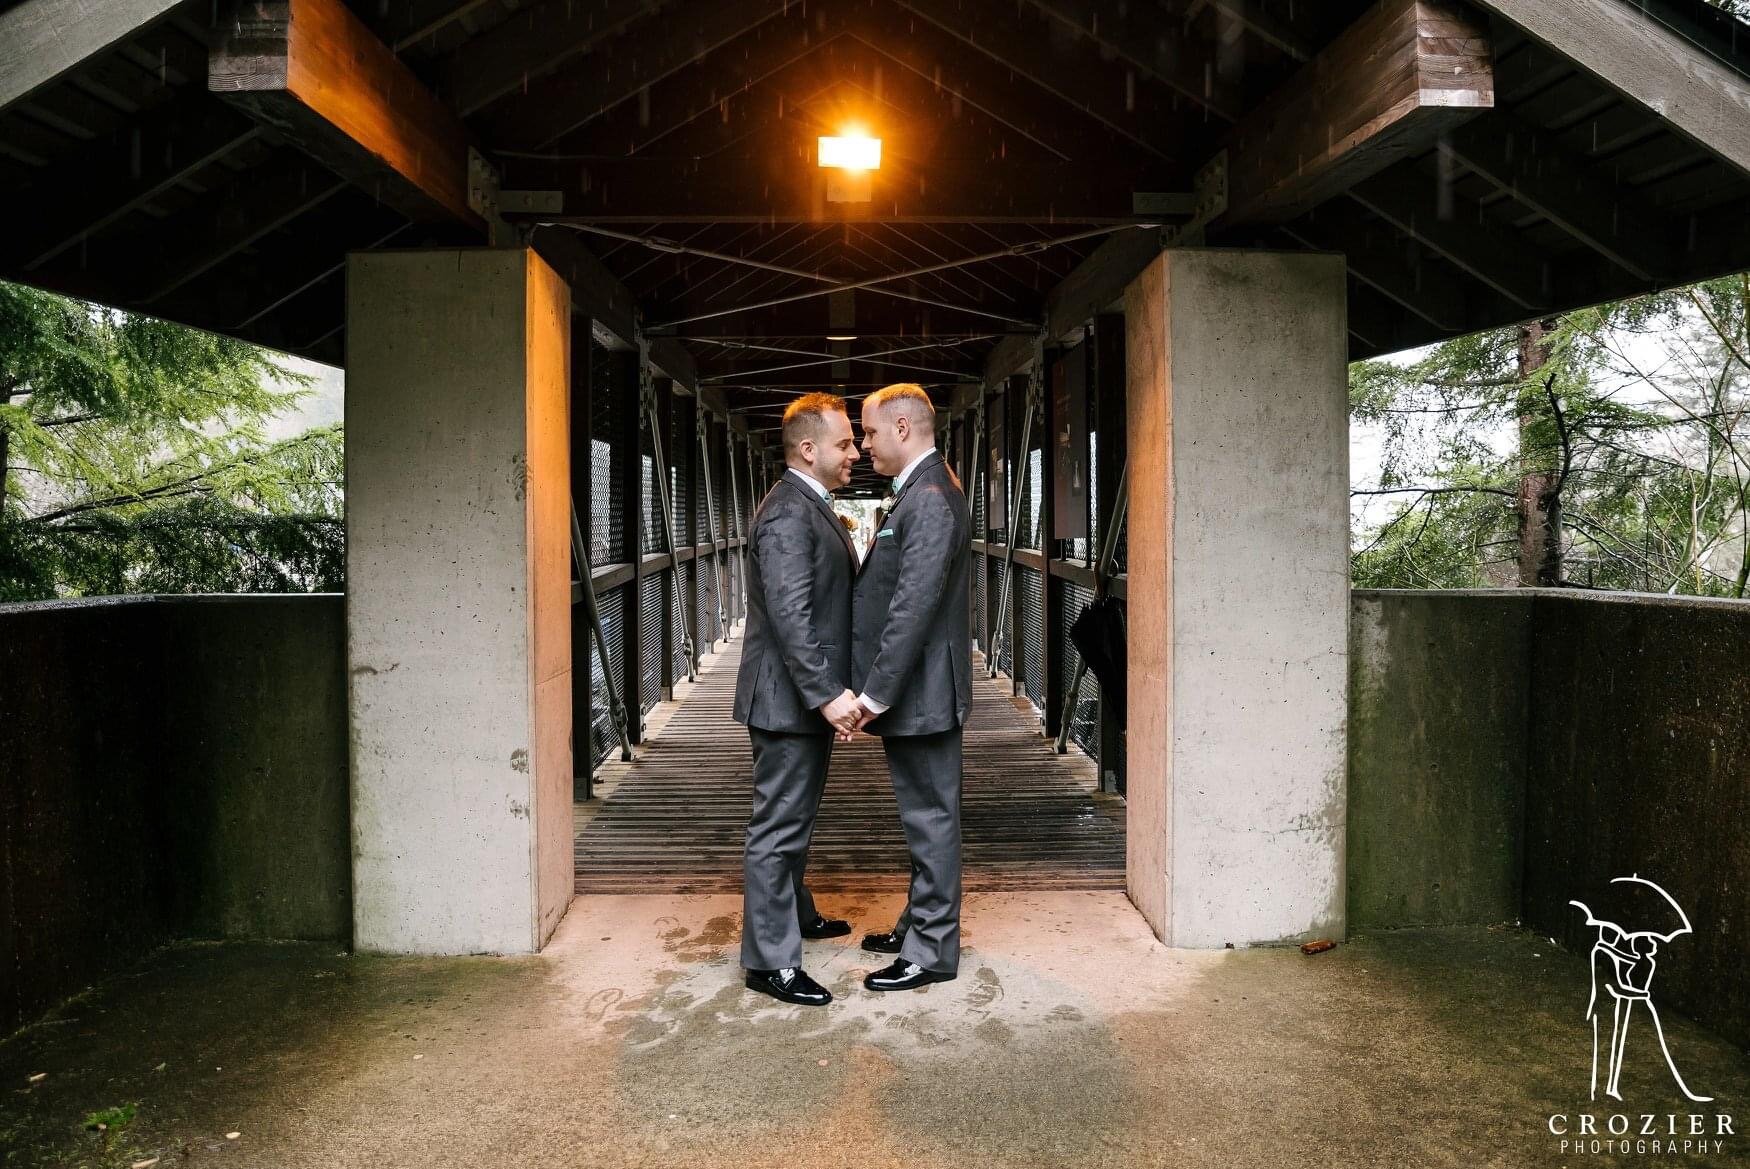 Happy 8th Wedding Anniversary Jereme + Mark.
.
.
.
.
.
#tacomawedding #tacoma #tacomaweddingpplanner #weddingplanner ##weddinganniversary #happyanniversary #seattle #seattleweddingplanner #seattlewedding #salishlodge